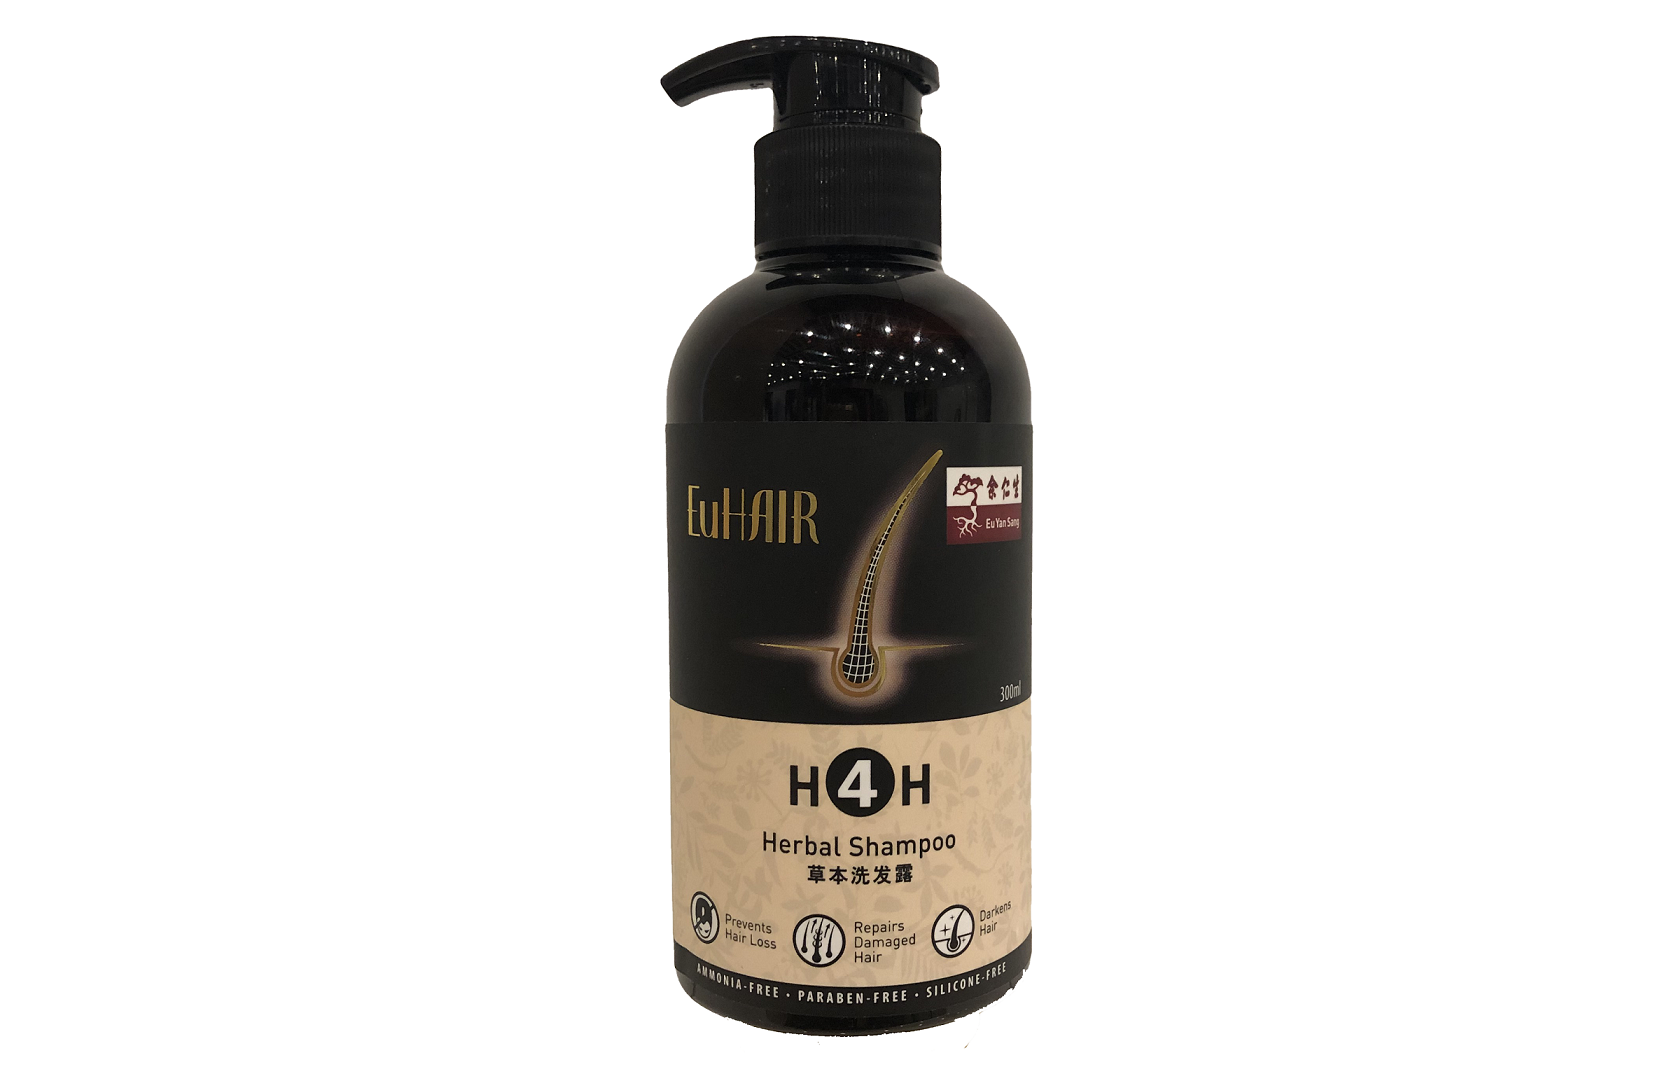 H4H Herbal Shampoo